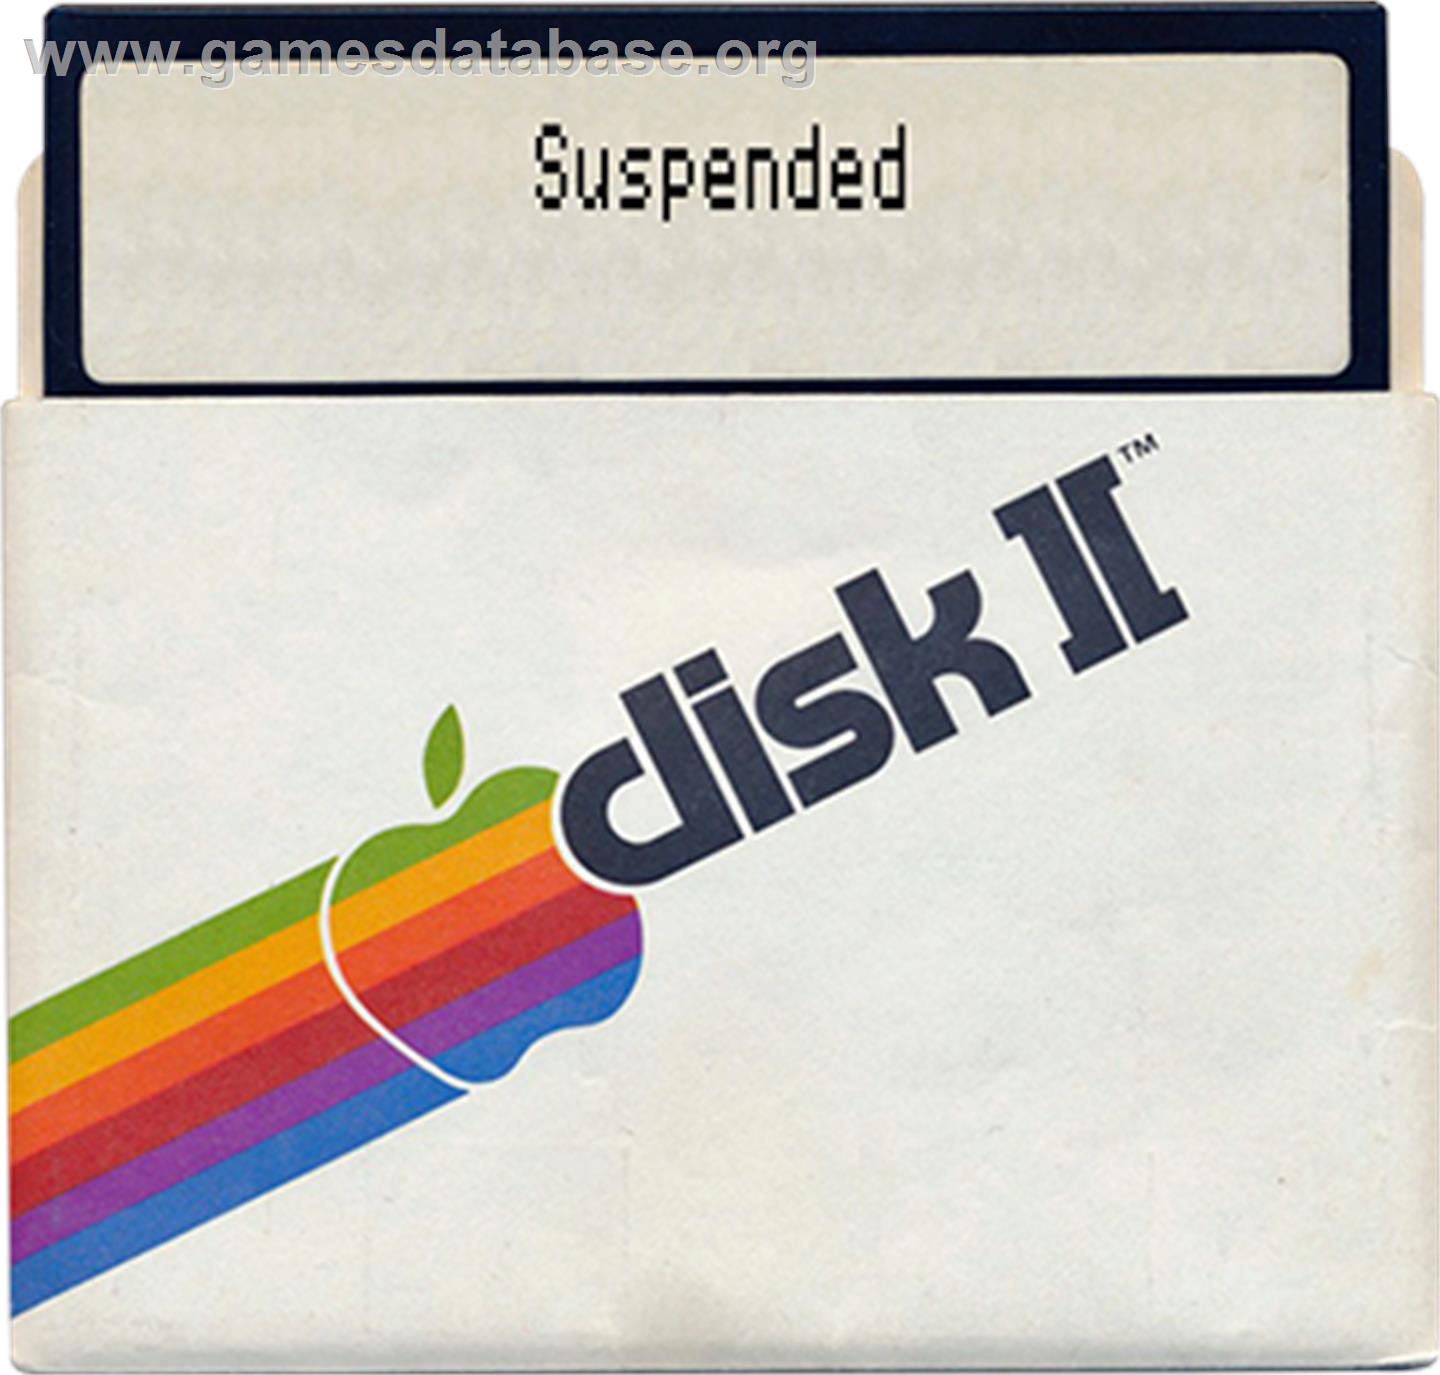 Suspended - Apple II - Artwork - Disc